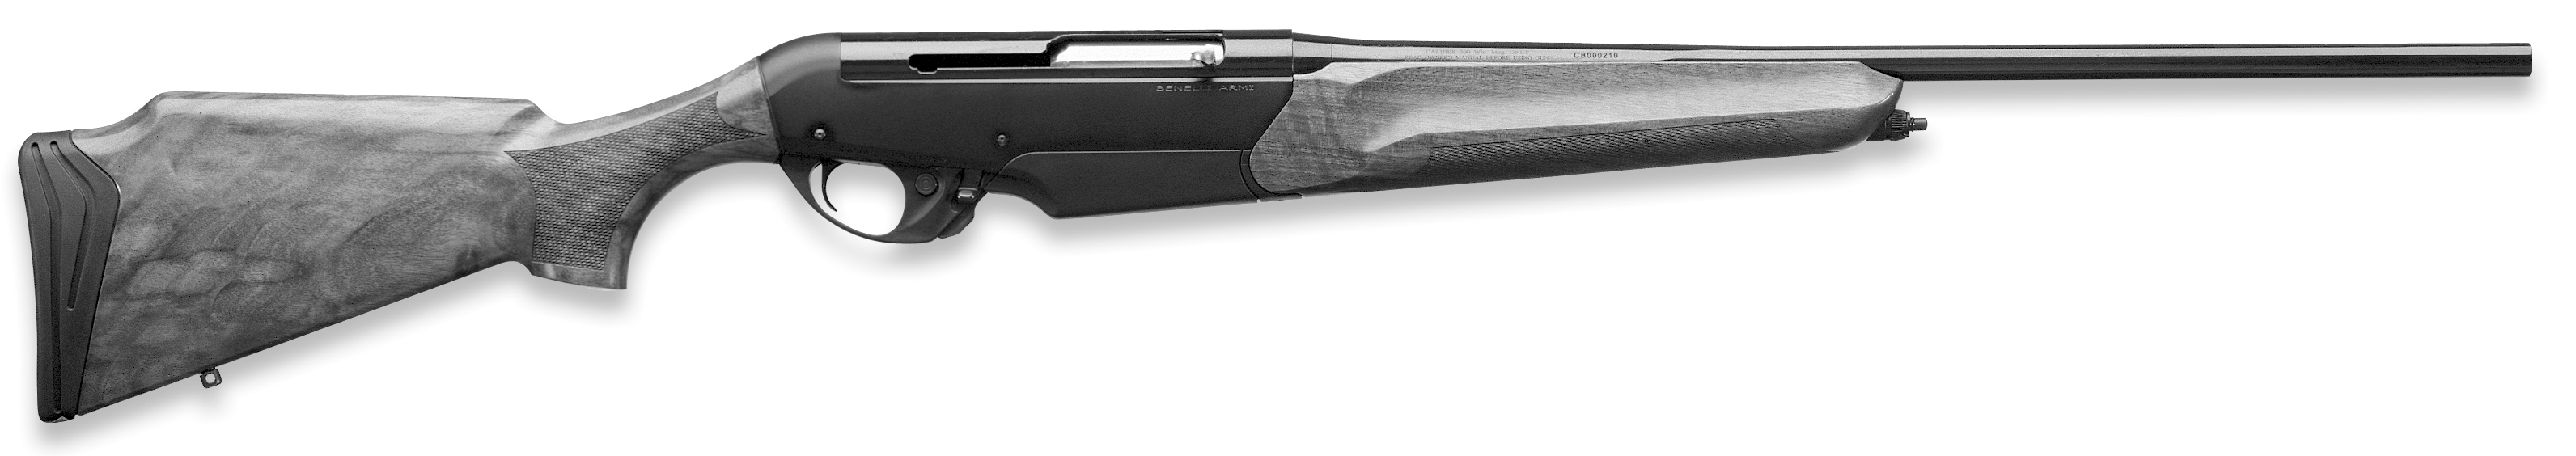 Model R1 Rifle